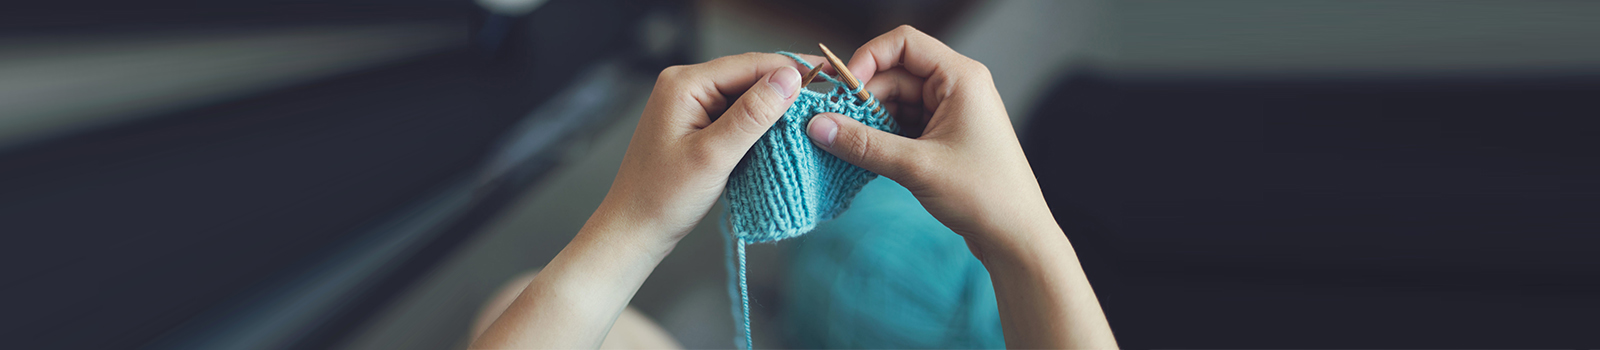 Knitting, Person, Human